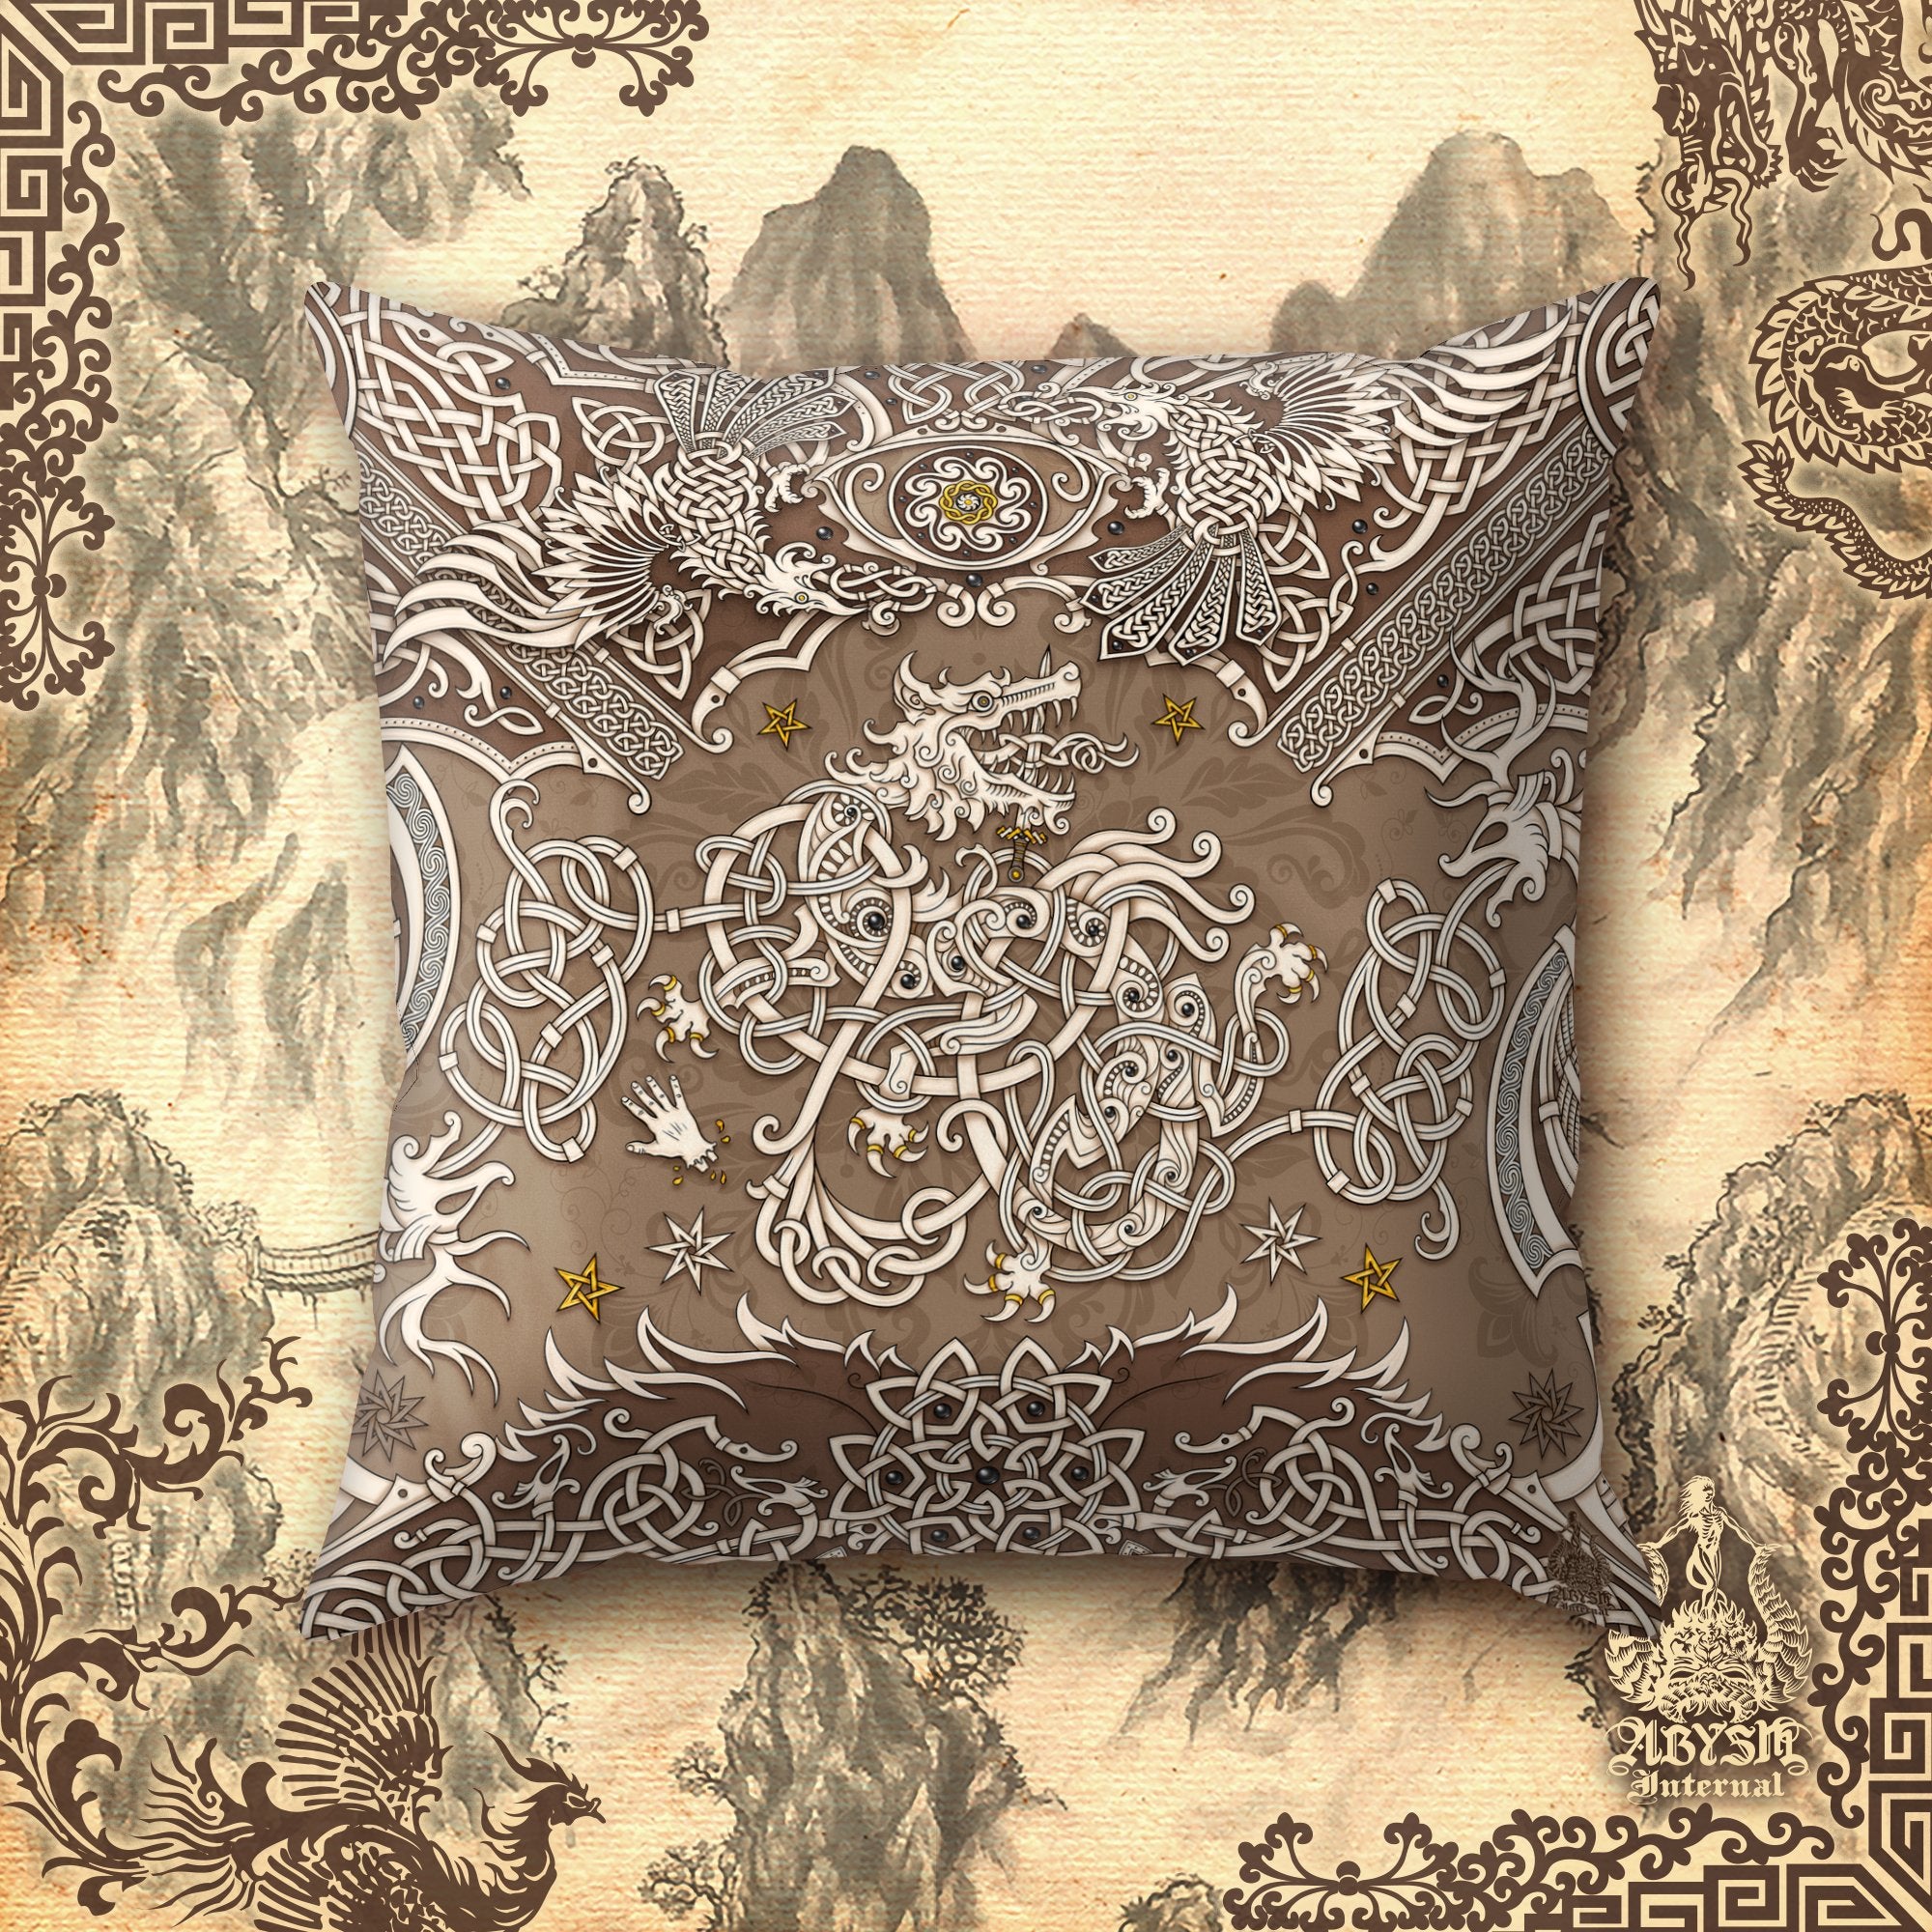 Norse Wolf Throw Pillow, Decorative Accent Pillow, Square Cushion Cover, Nordic Room Decor, Fenrir Knotwork, Viking Art, Alternative Home - Cream - Abysm Internal